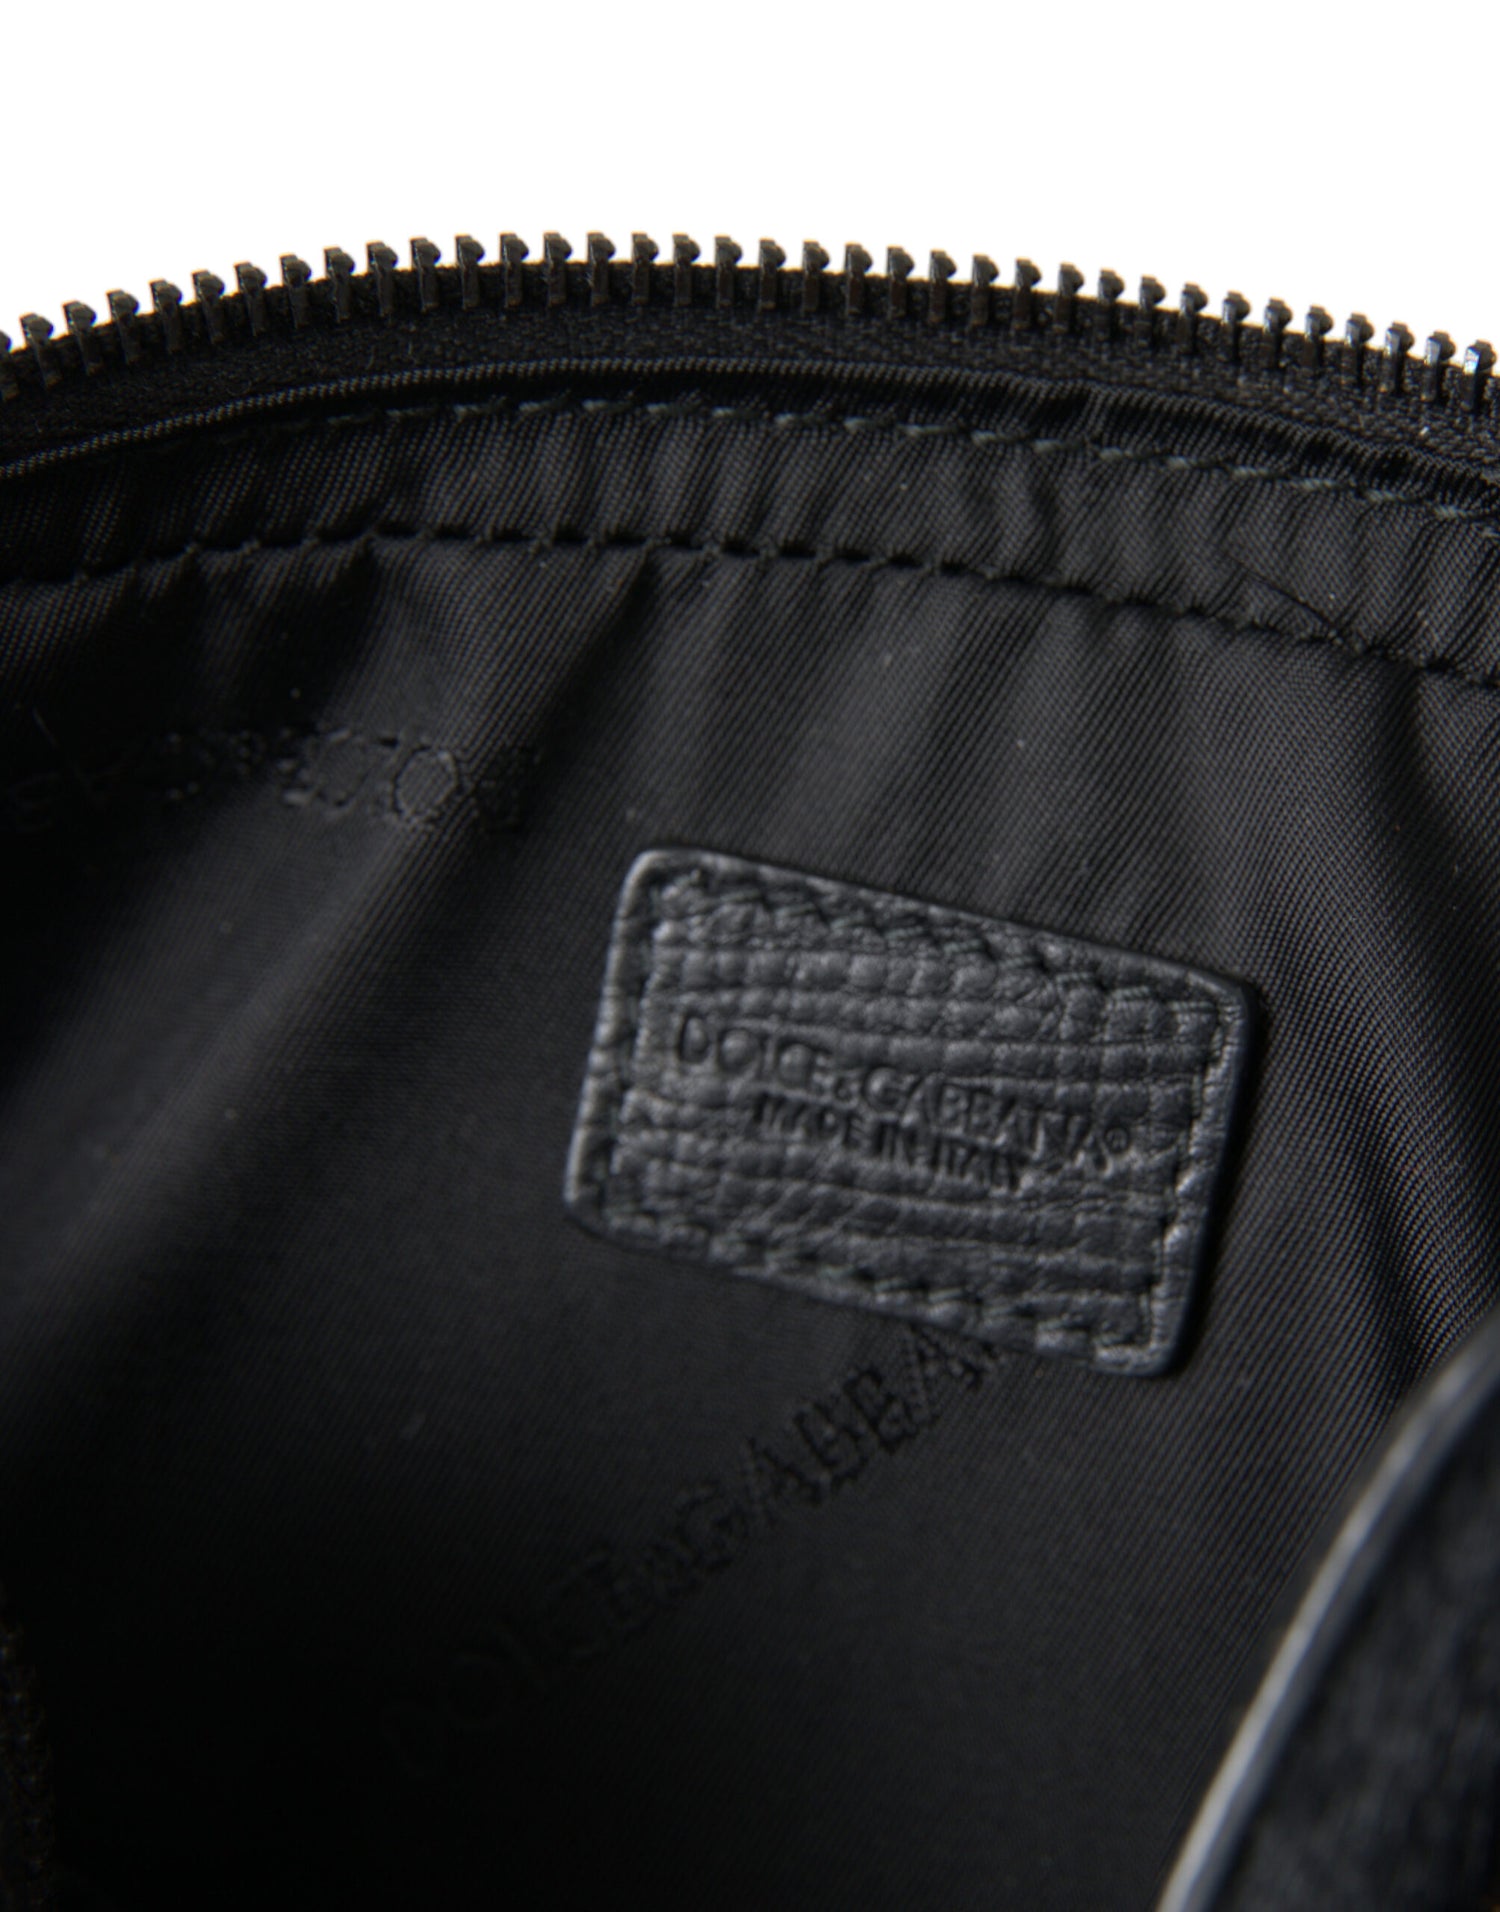 Dolce & Gabbana Black Calfskin Leather Bee Embellished Clutch Bag - DEA STILOSA MILANO